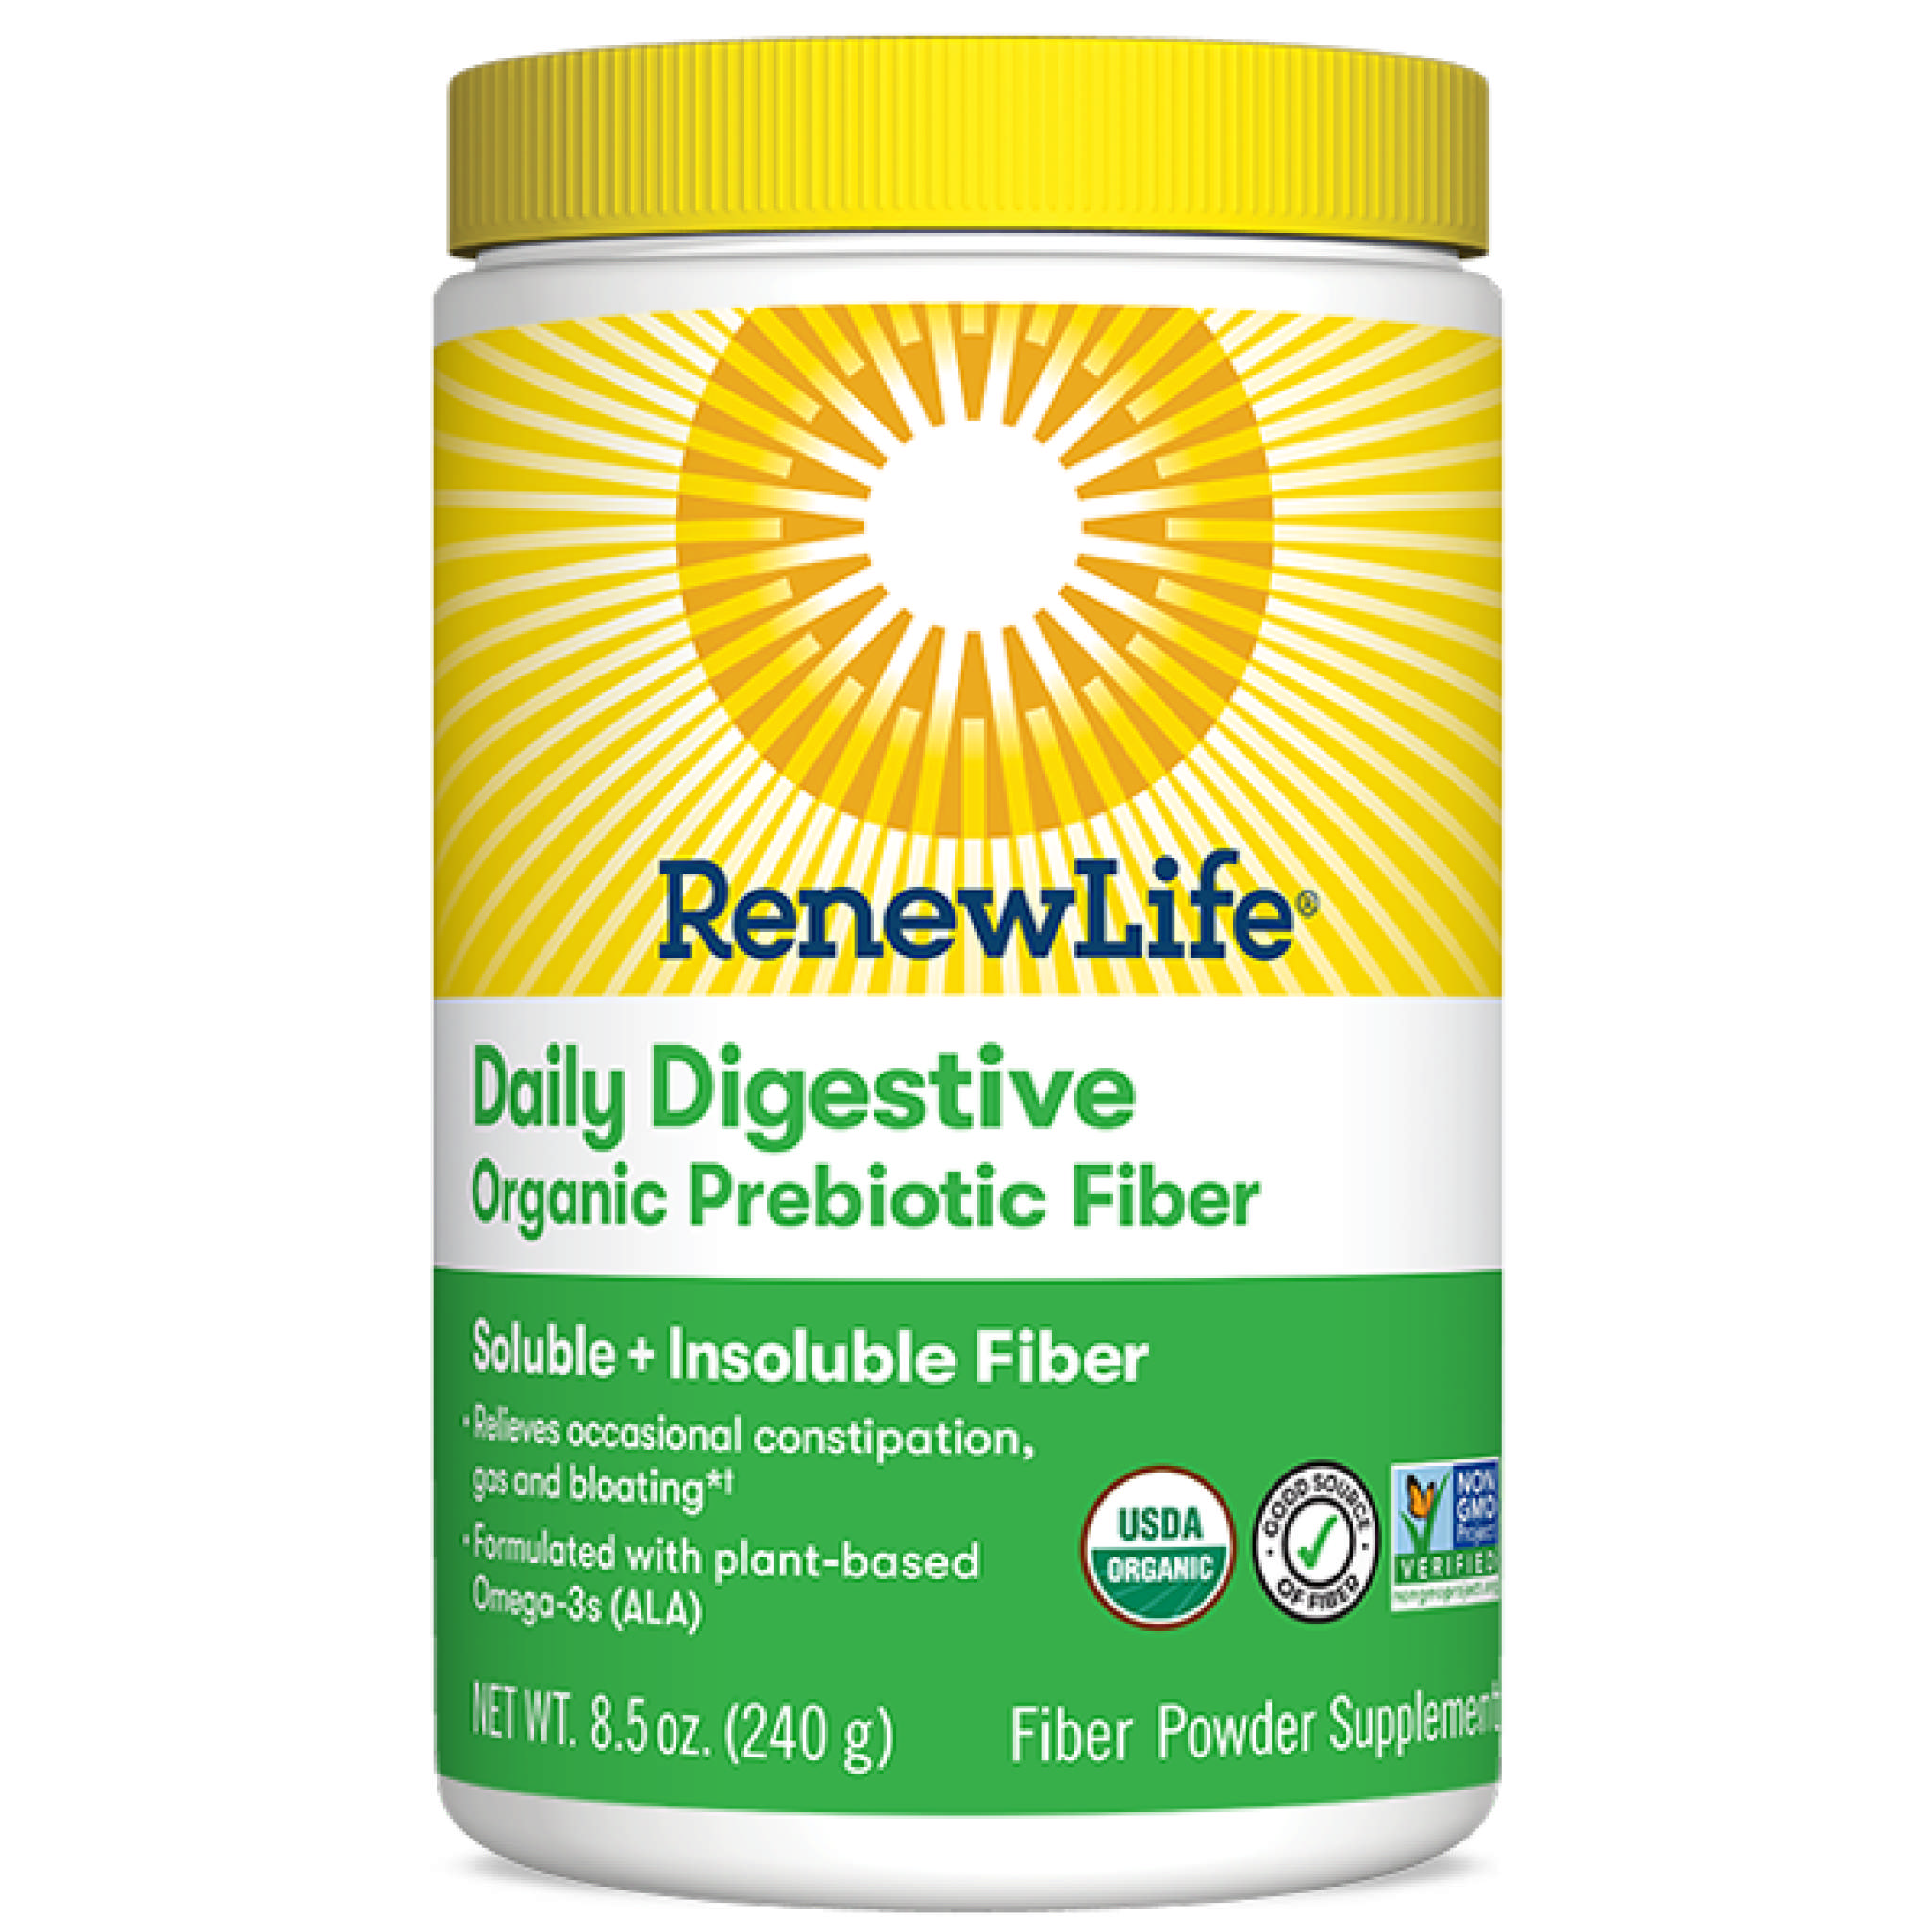 Renew Life - Digestive Daily Fiber powder